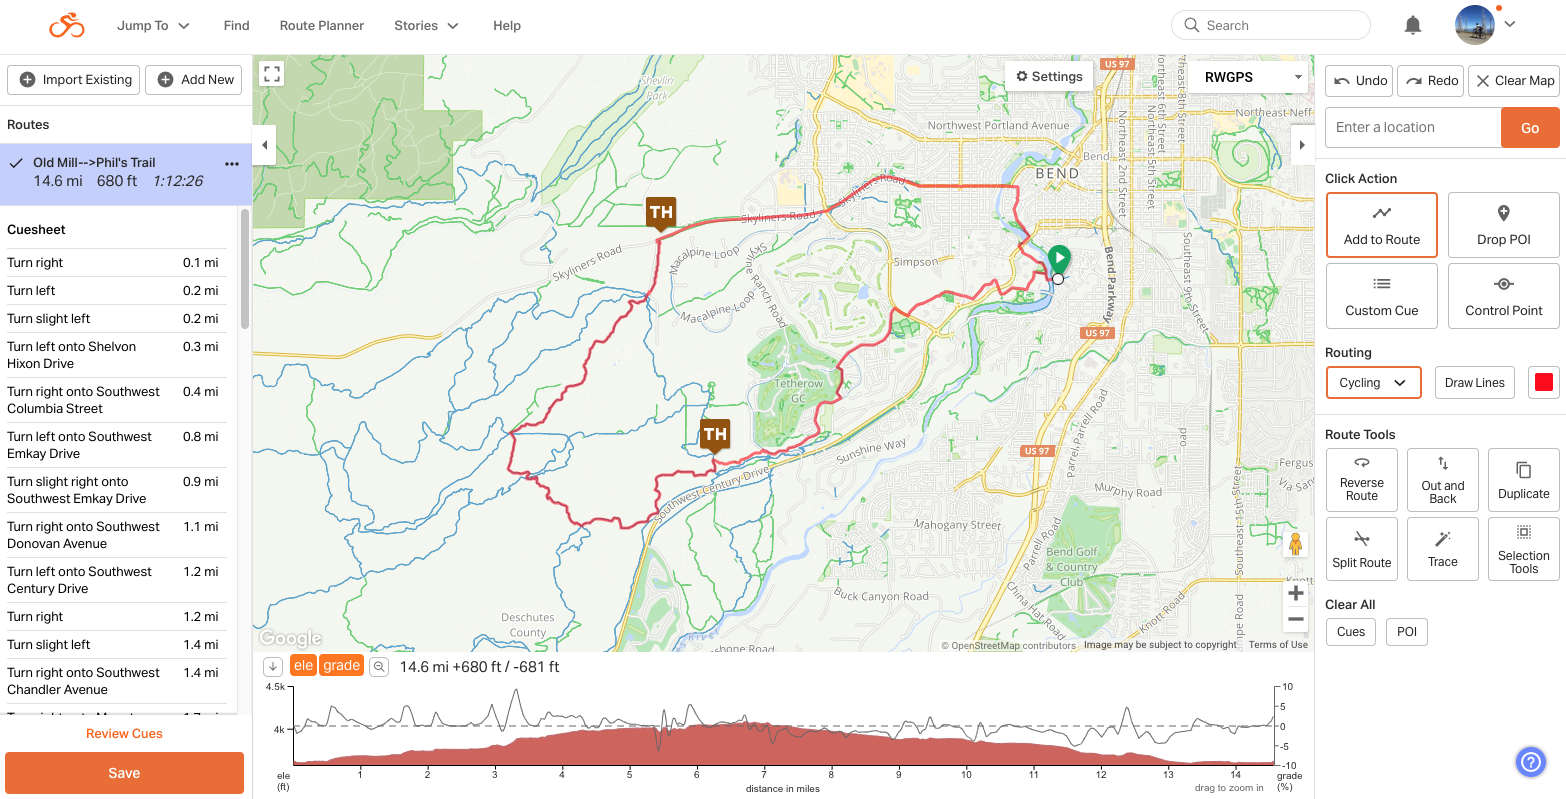 Soldat Vei fi mai bun Siestă  About the Bike Route Planner - Ride with GPS